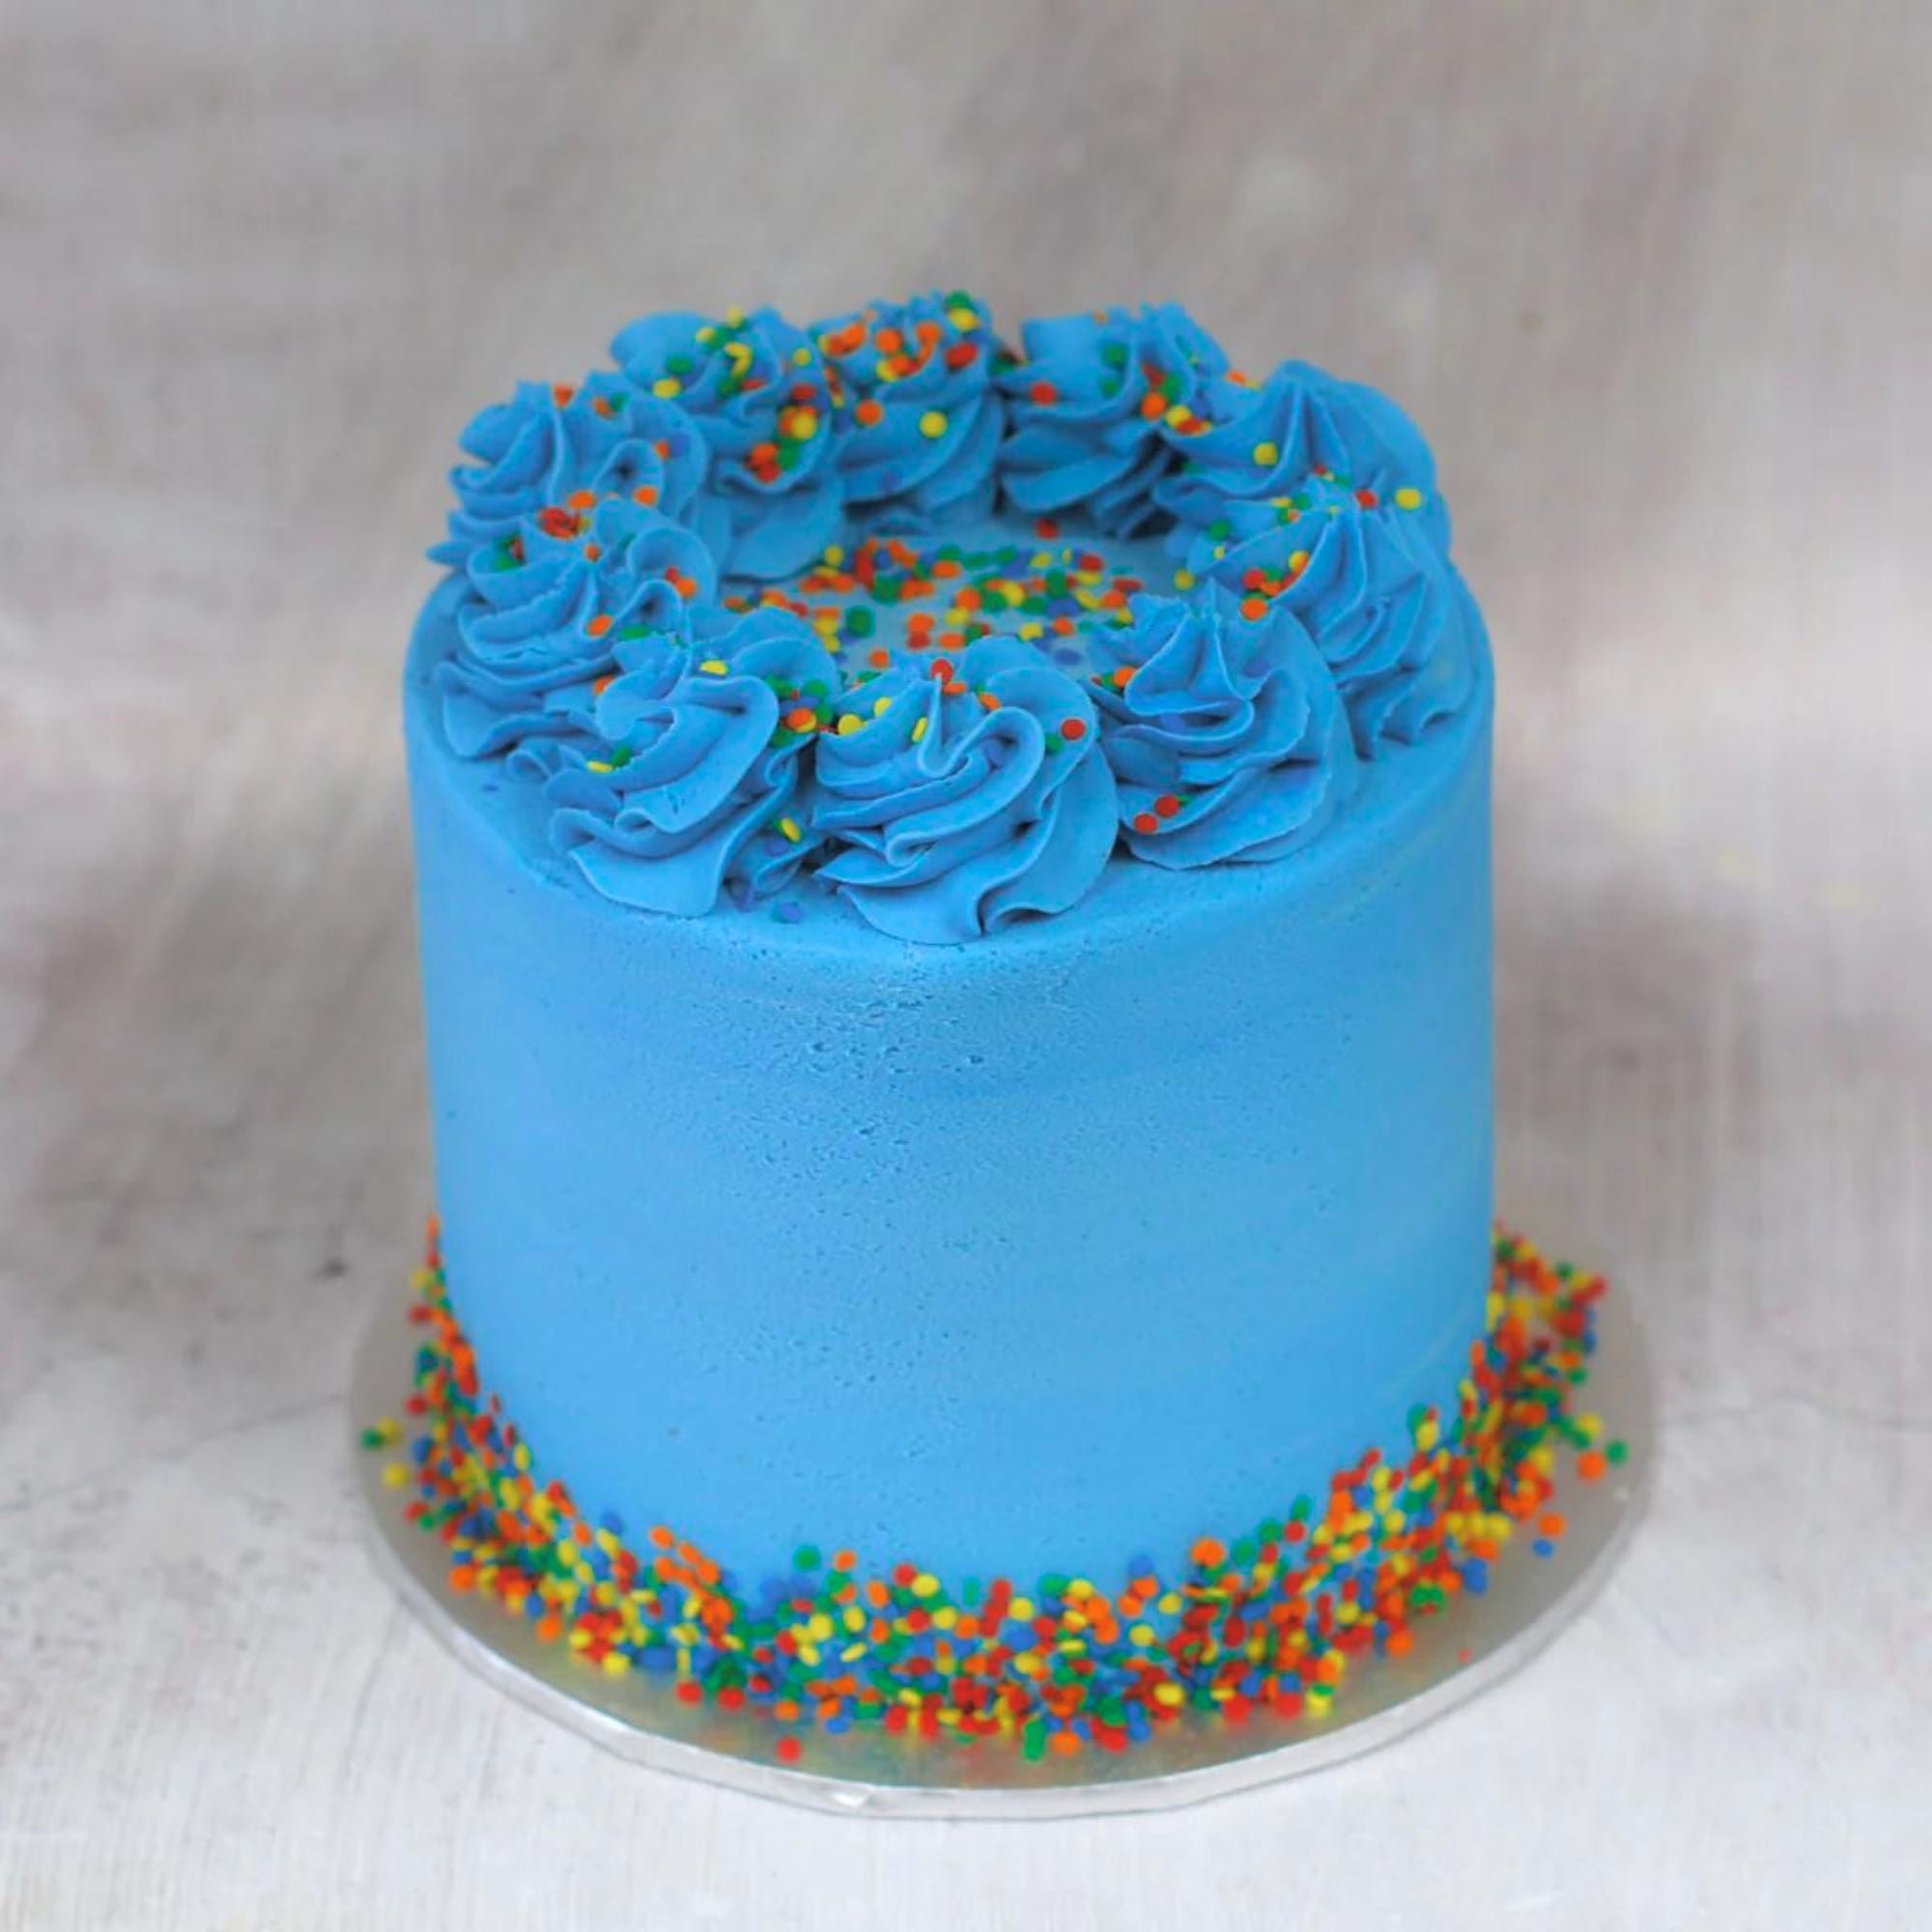 Brilliant Blue Cake - 5 Inch Cakes The Cupcake Queens 